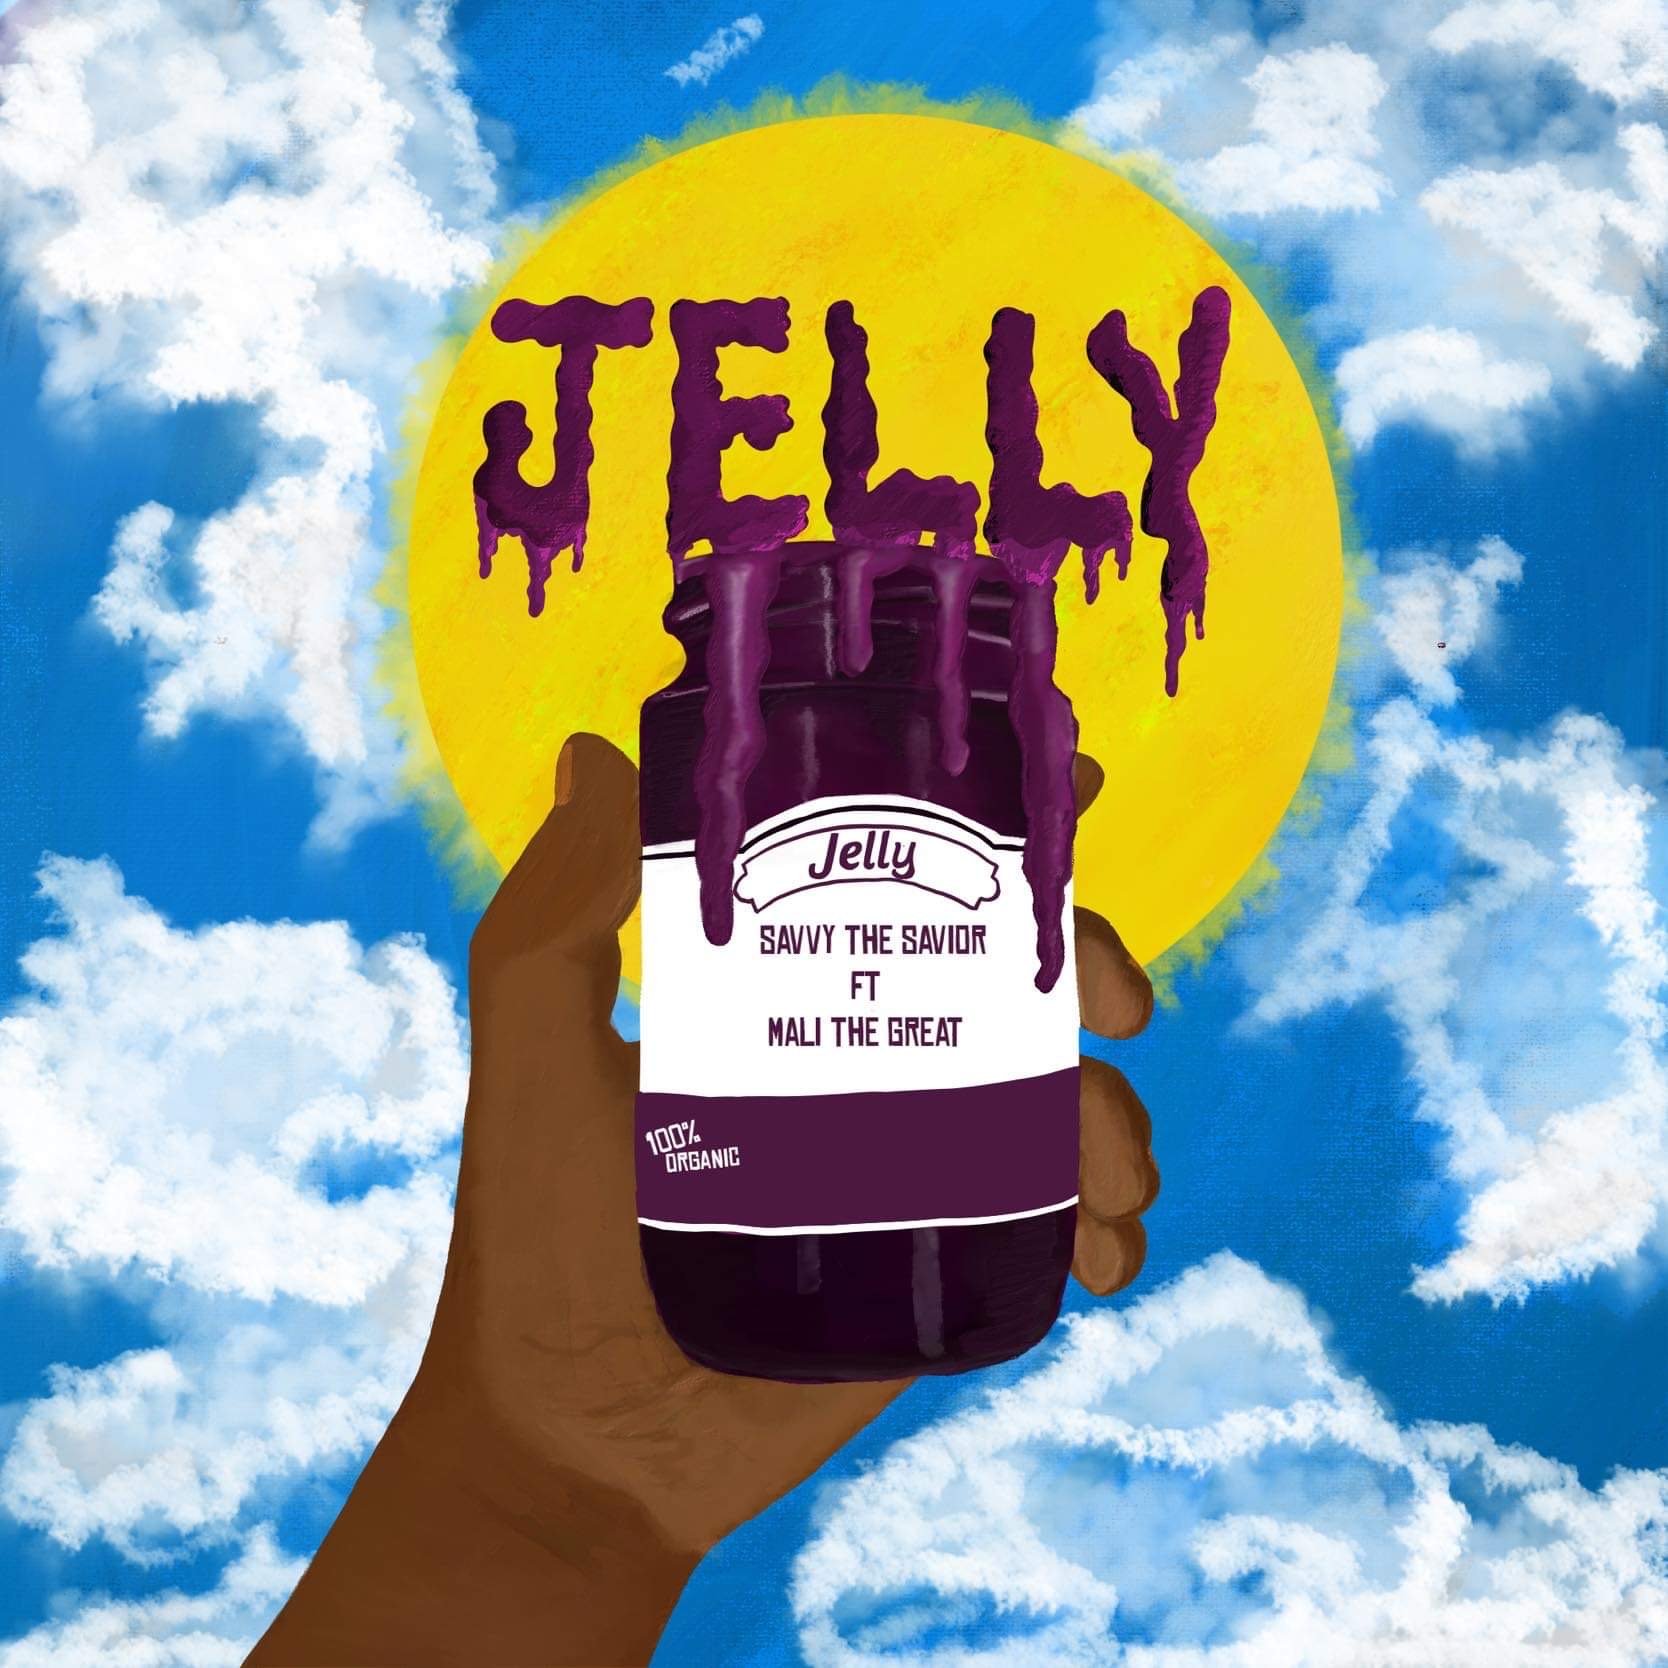 Jelly - Savvy The Savior Ft Mali The Great